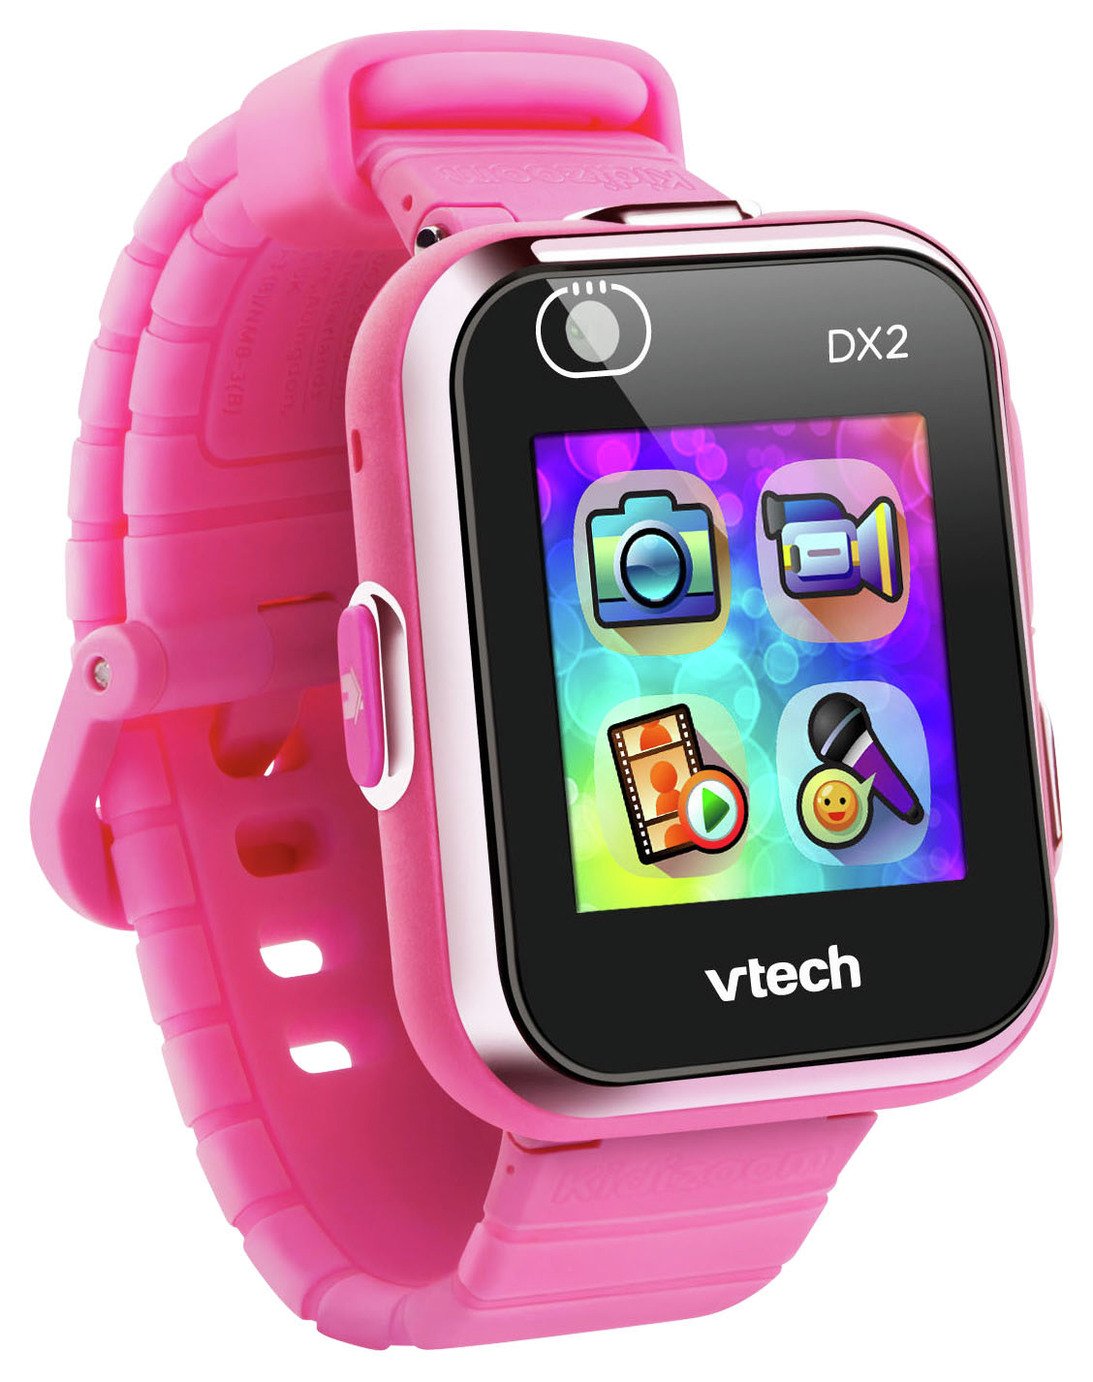 vtech watches for children